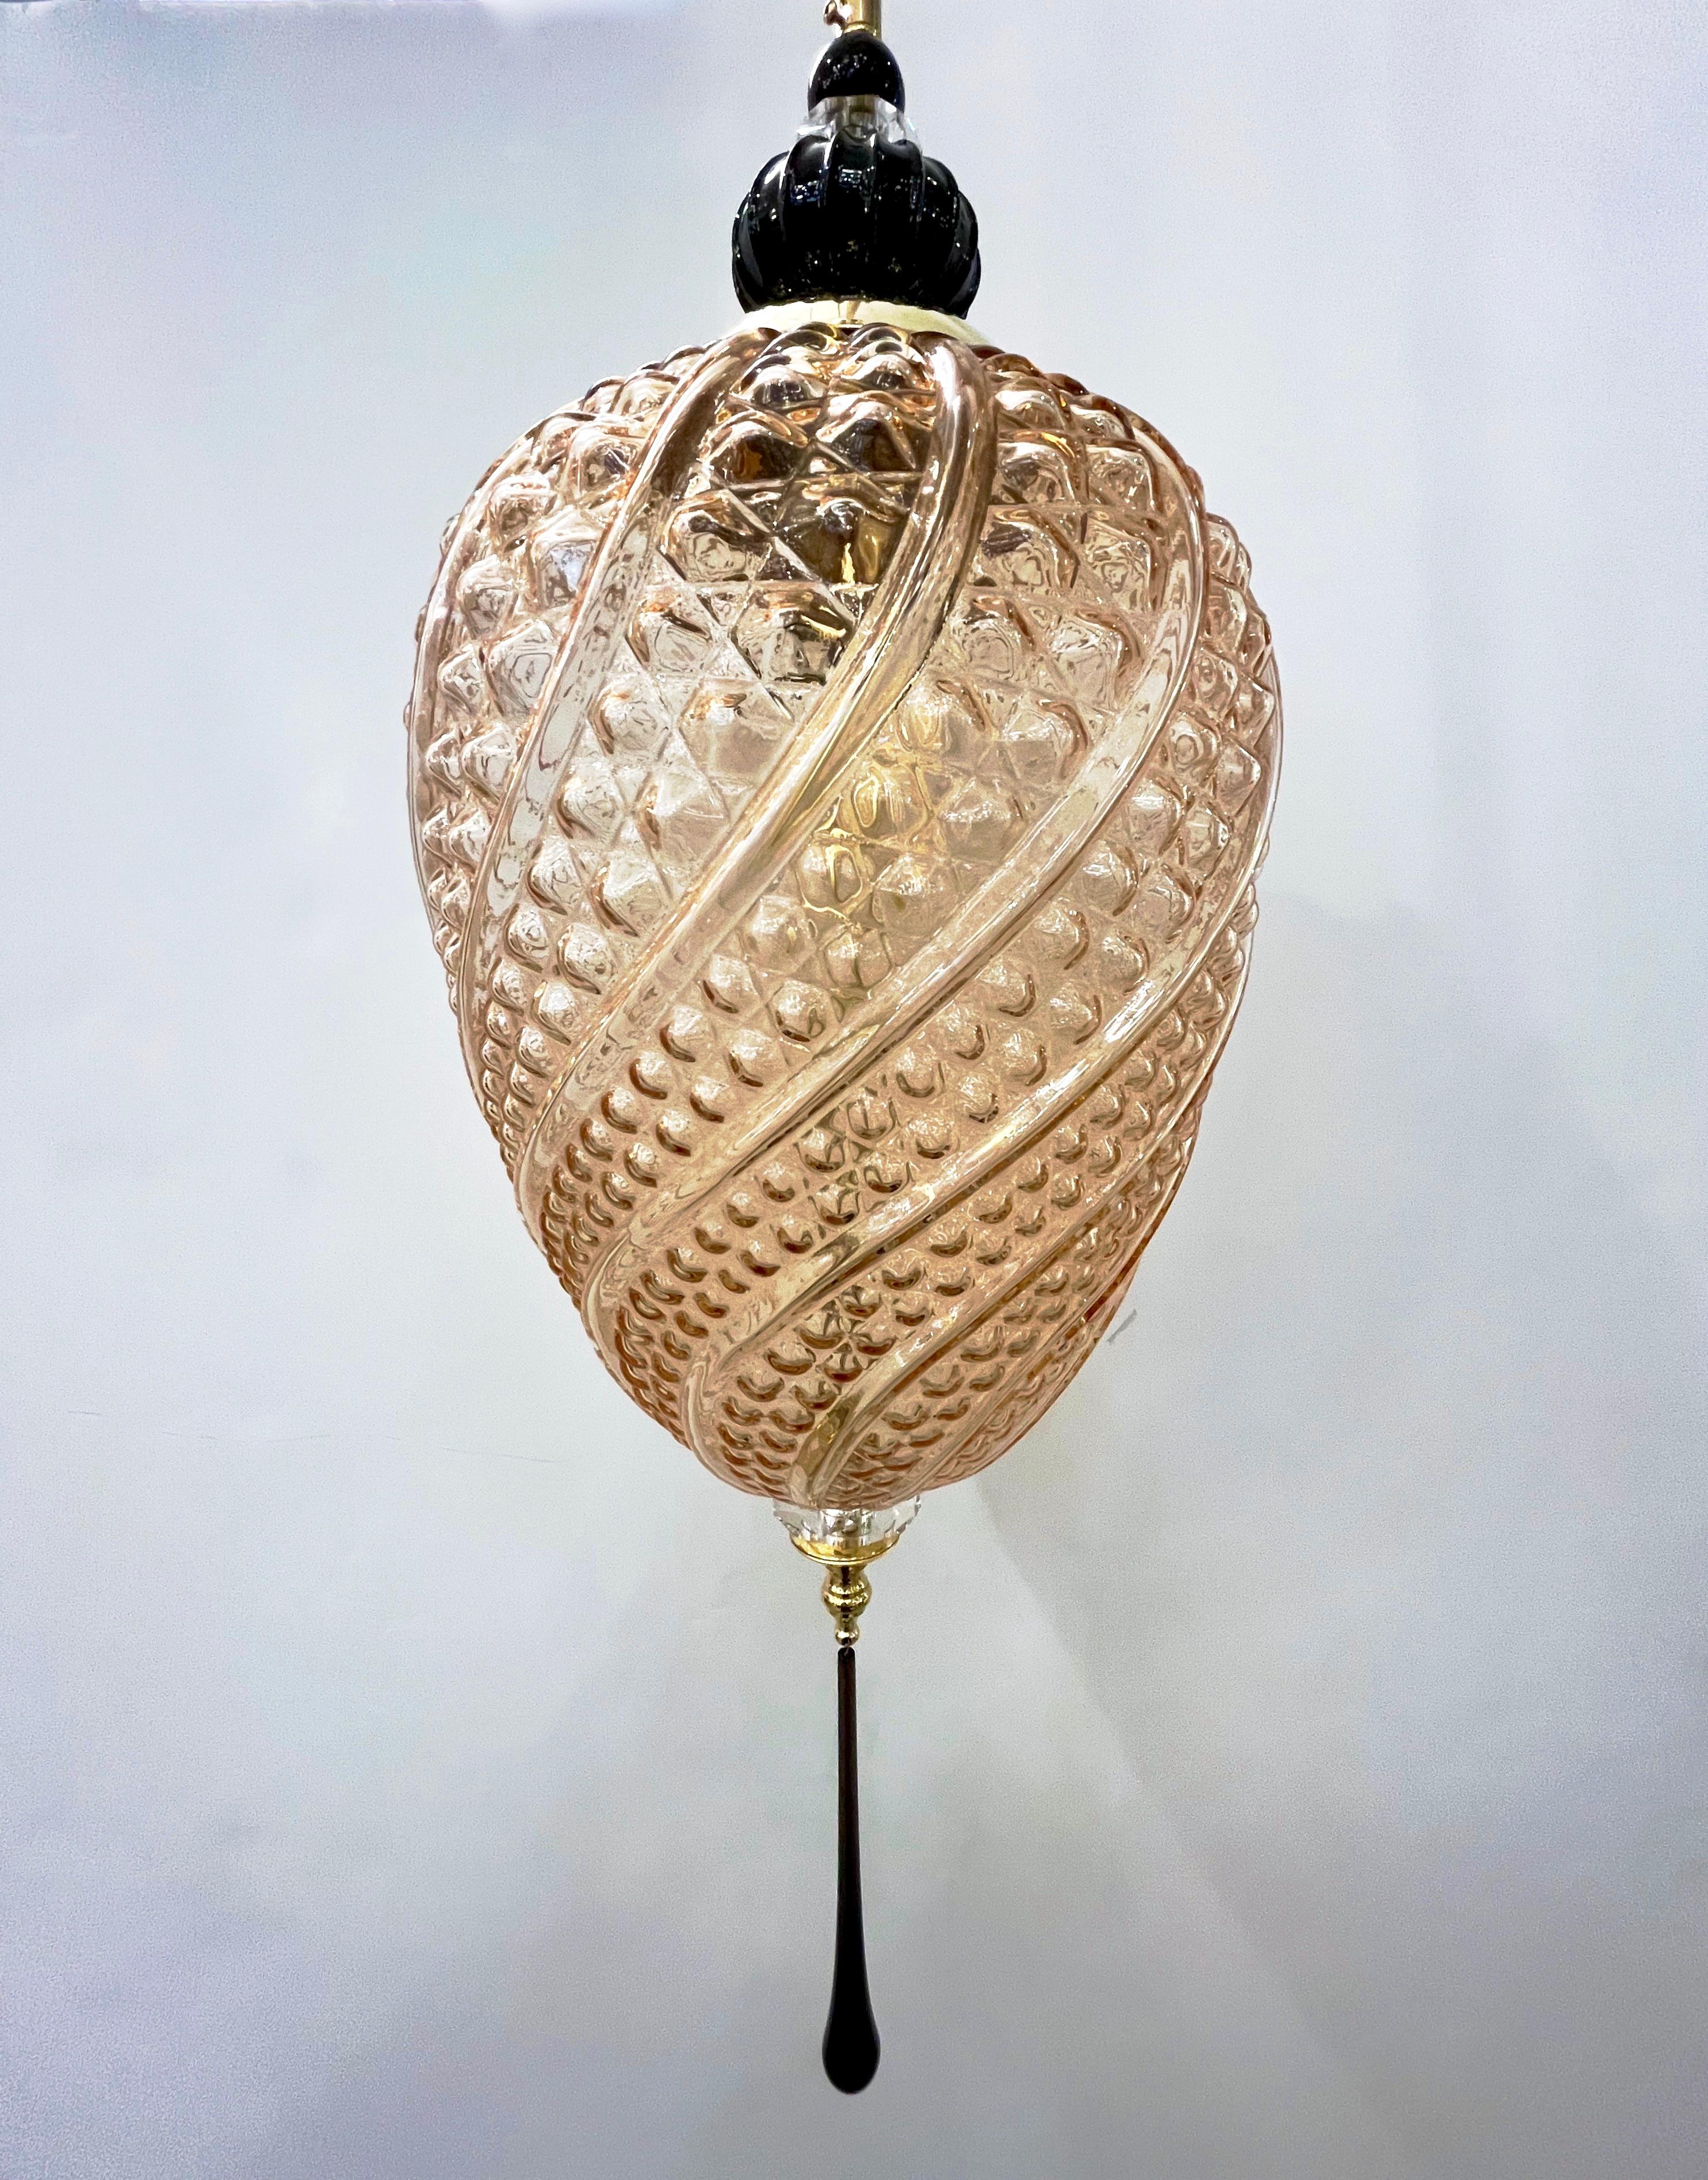 Bespoke Italian Oval Black and Pink Crystal Murano Glass Brass Egg Pendant Light For Sale 3